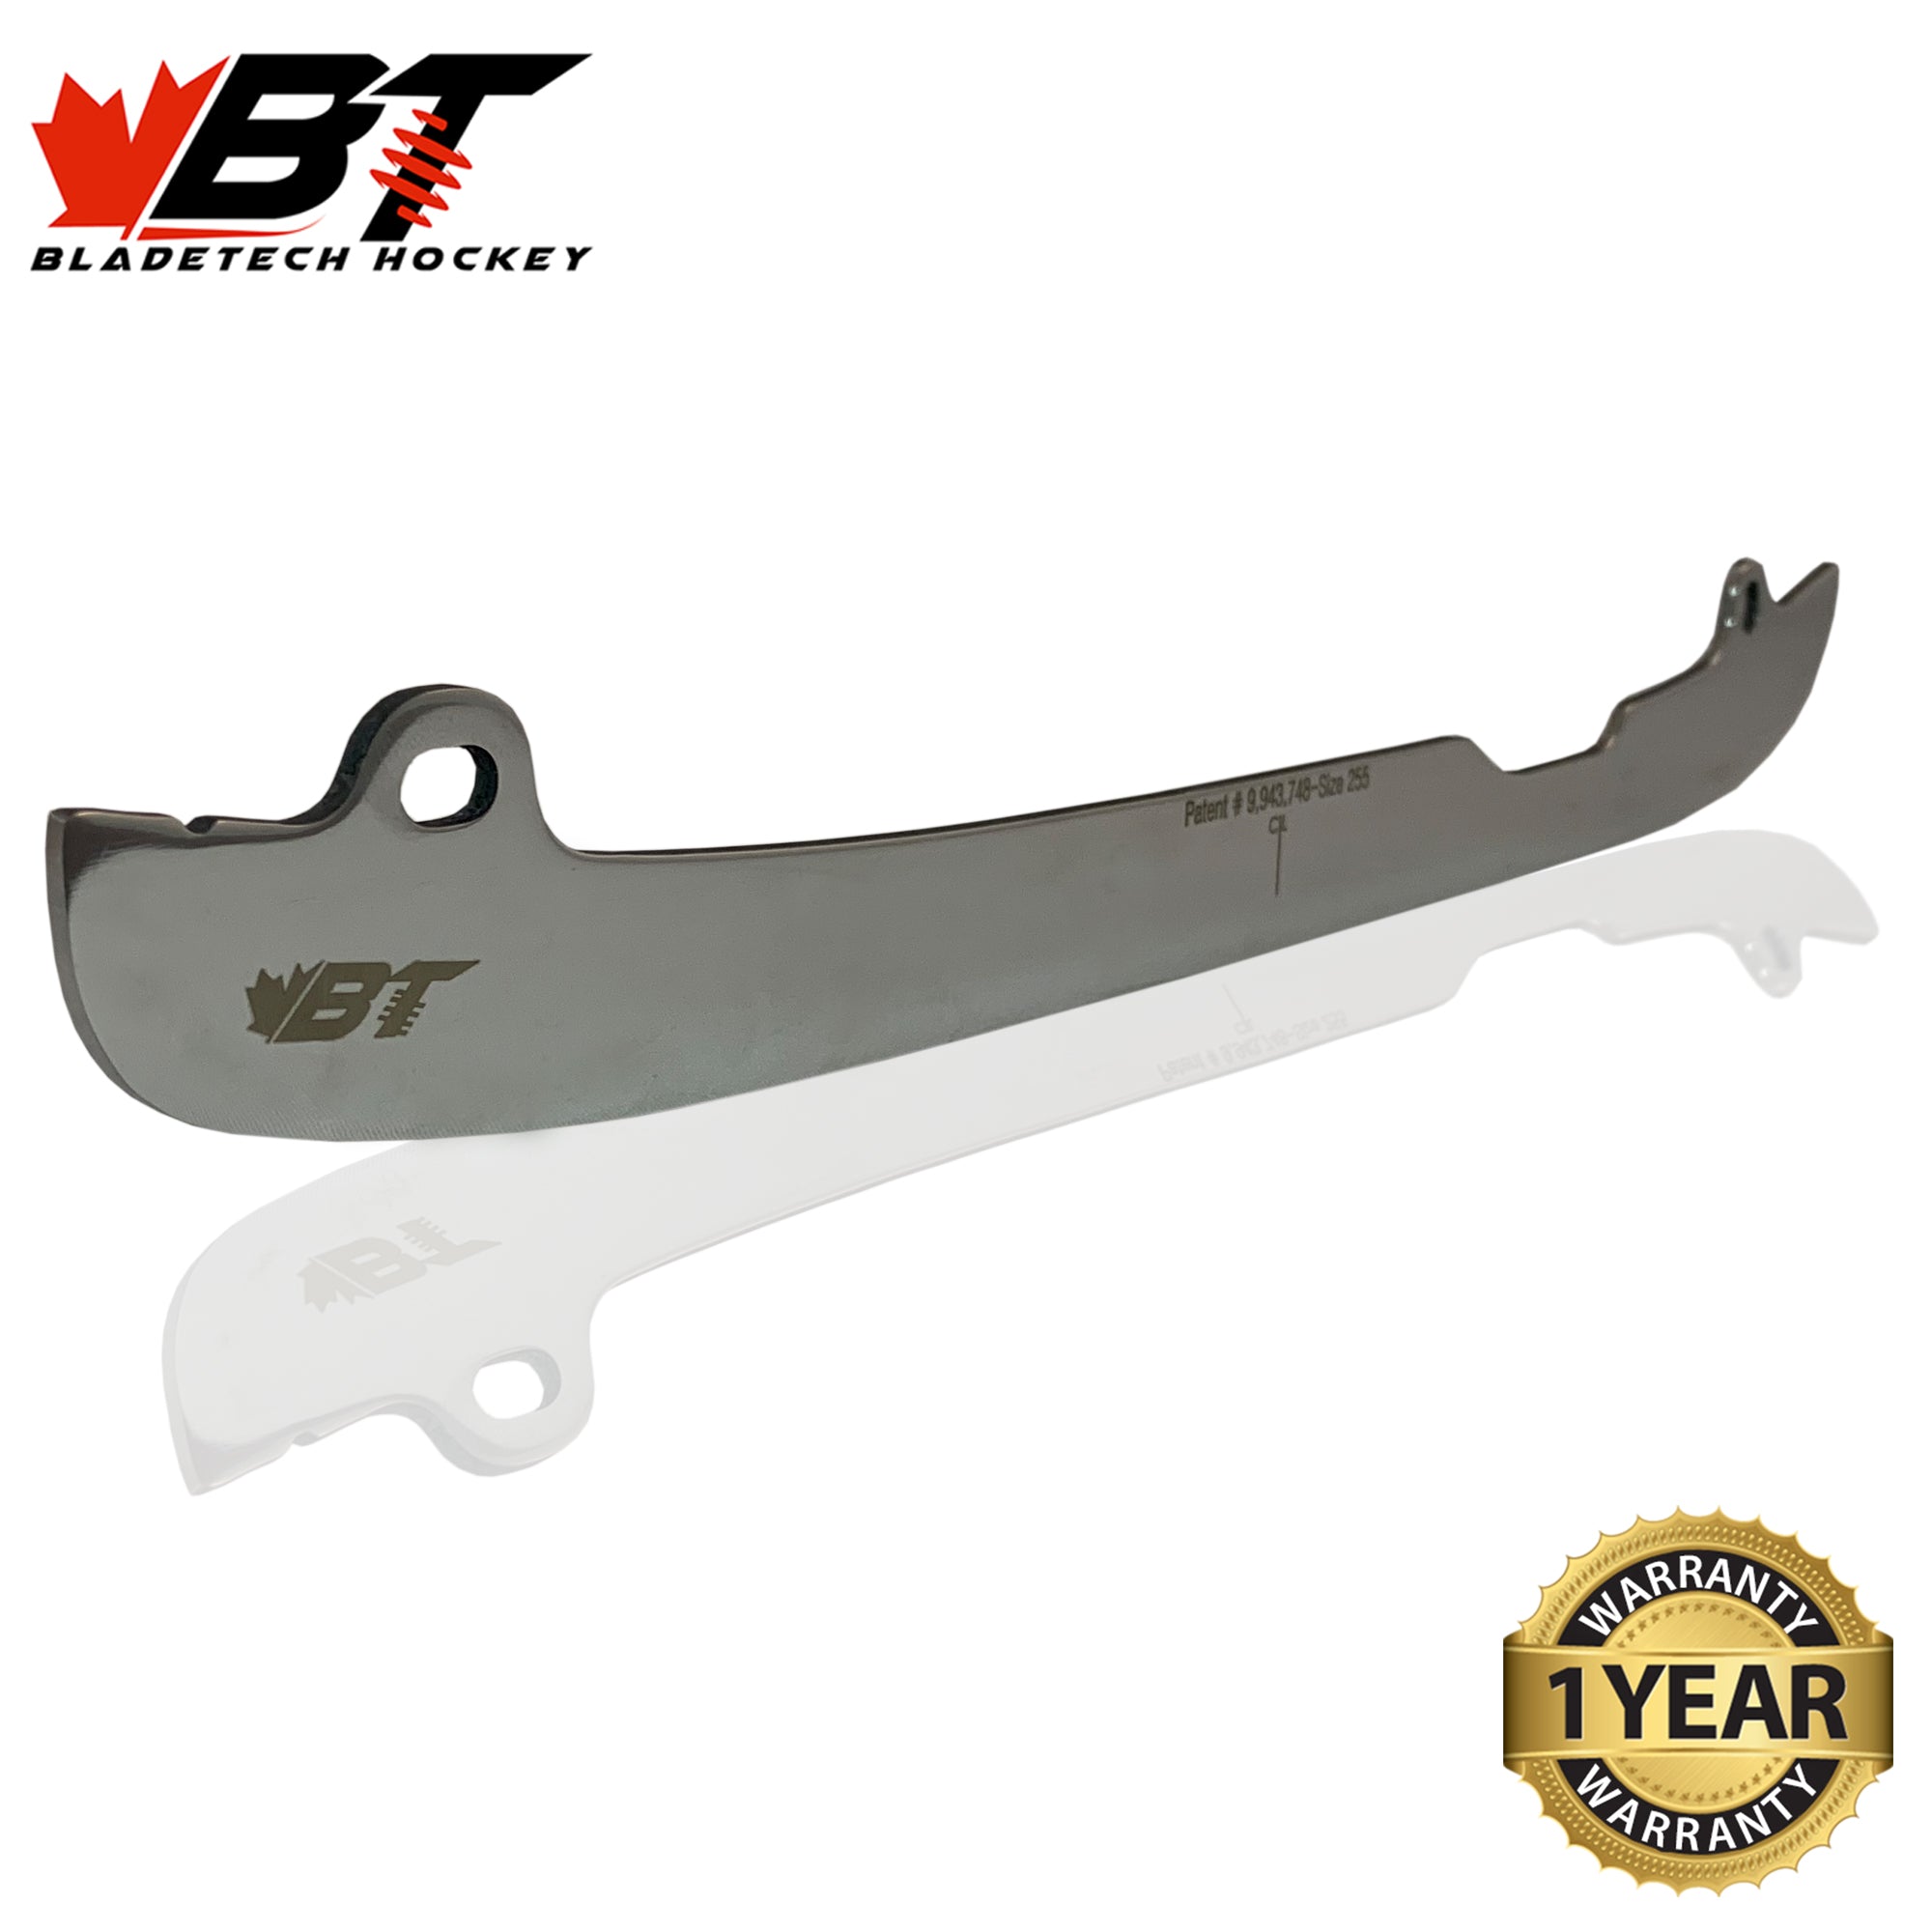 Bladetech Mirror Stainless Steel Blades - SB +4.0 - Tydan Specialty Blades Inc. (USA)